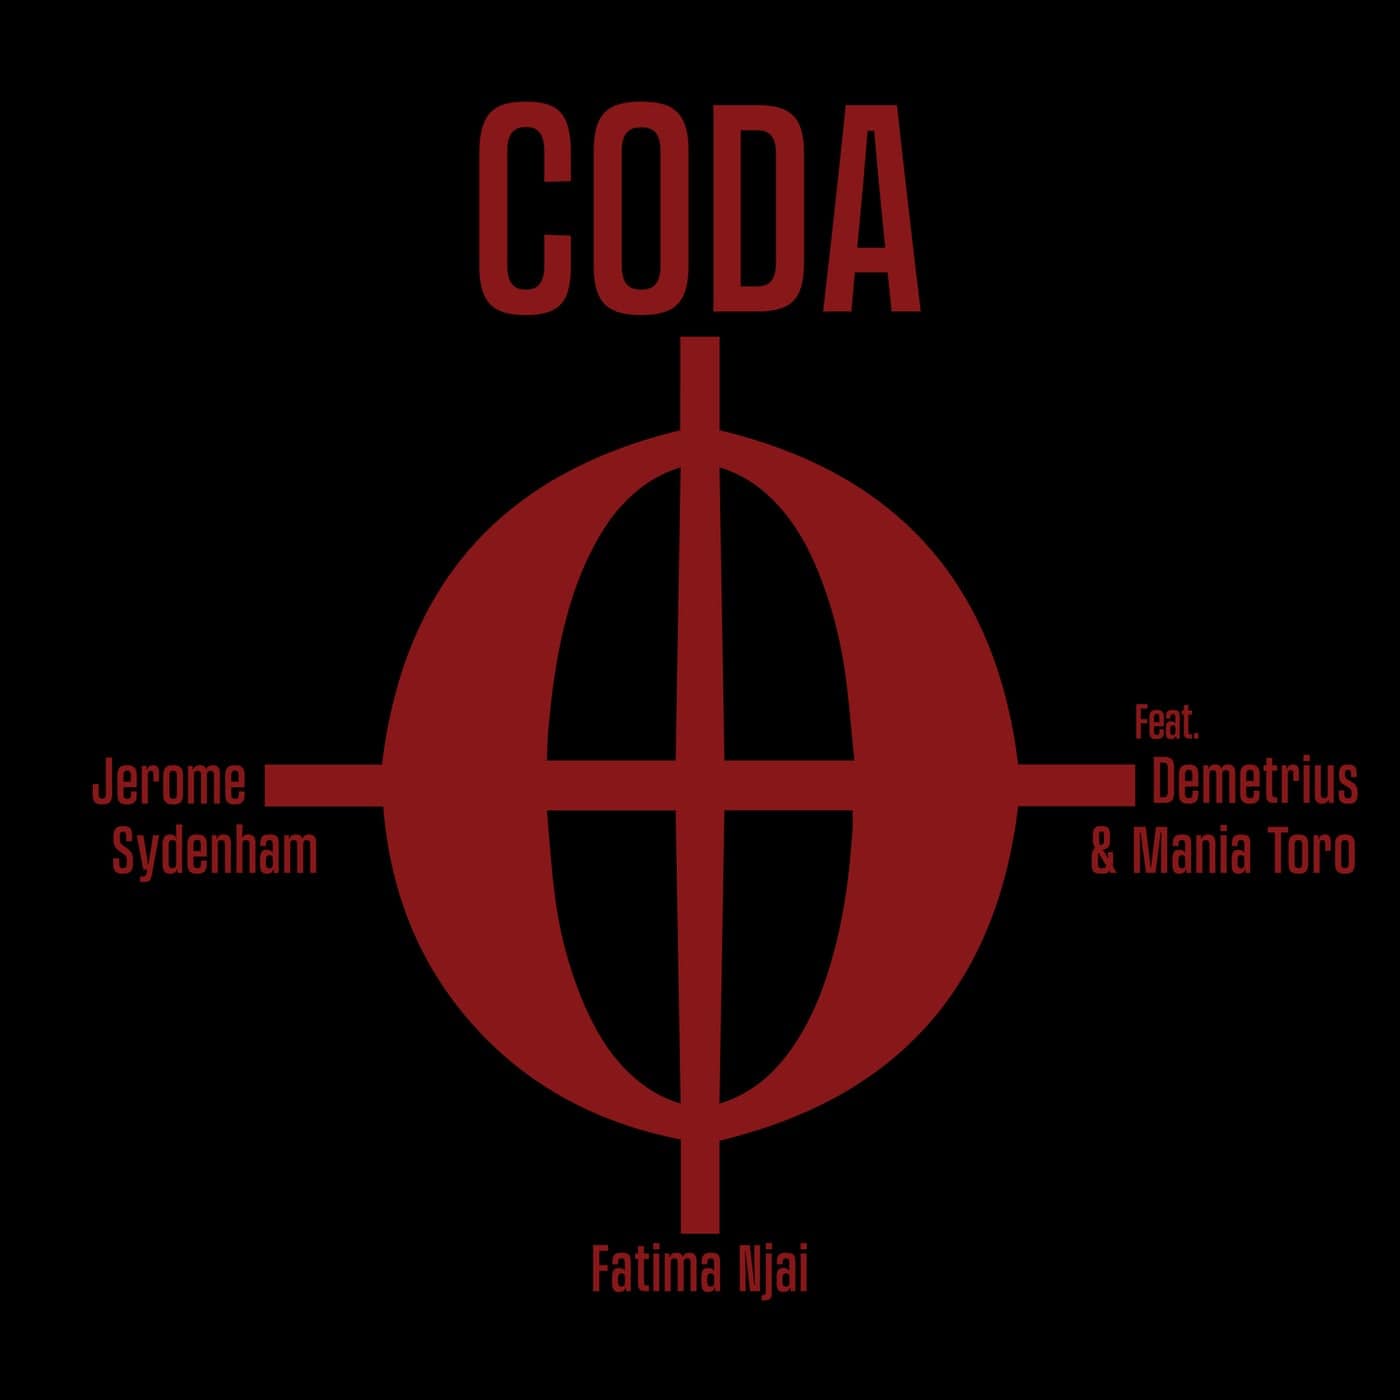 Download Jerome Sydenham, Fatima Njai, Mania Toro, Demetrius - CODA on Electrobuzz